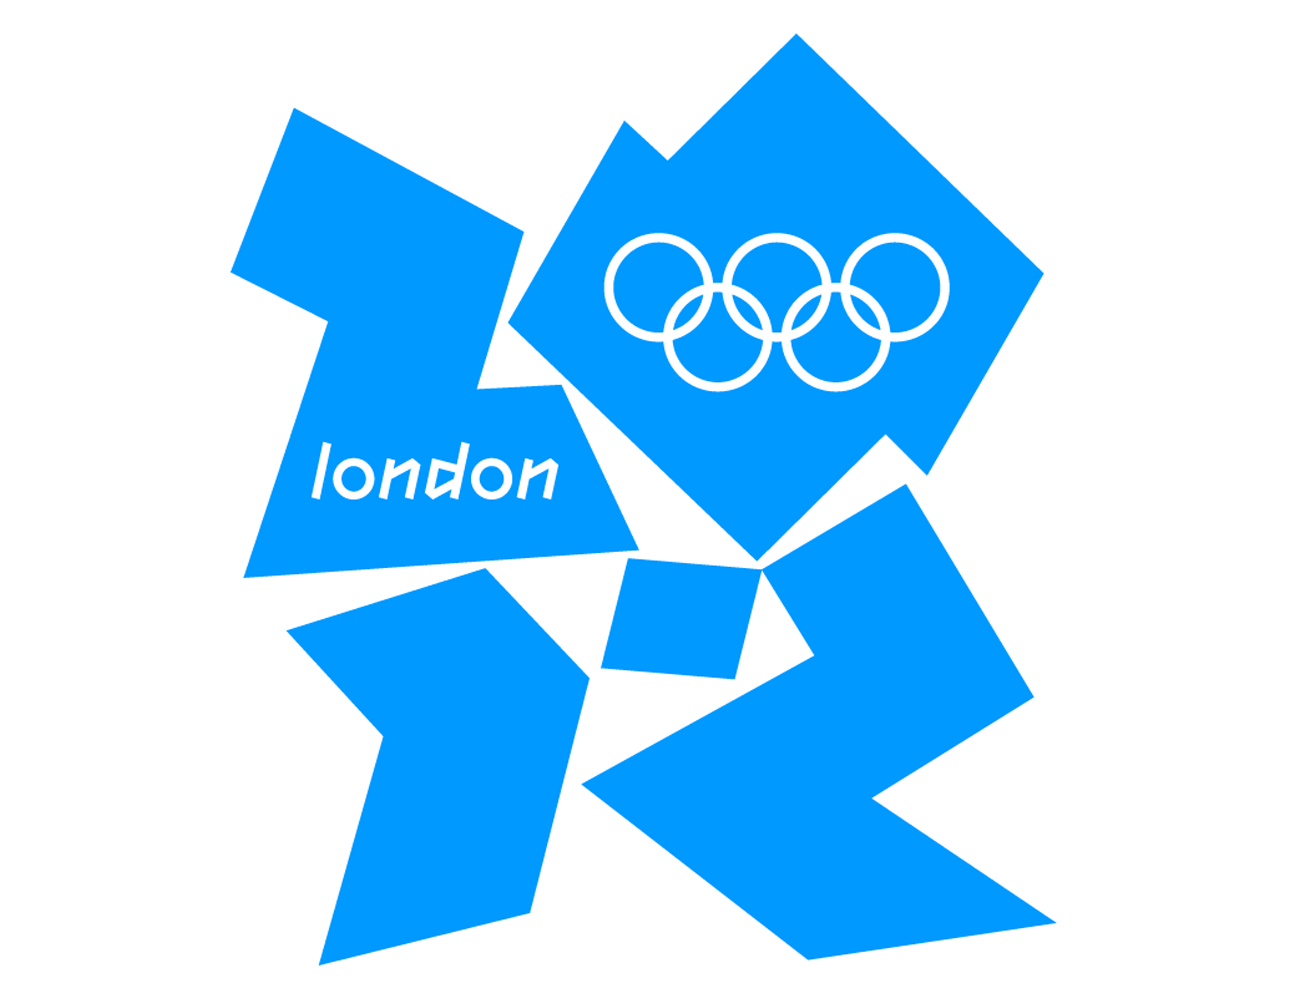 London Olympics 2012 logo